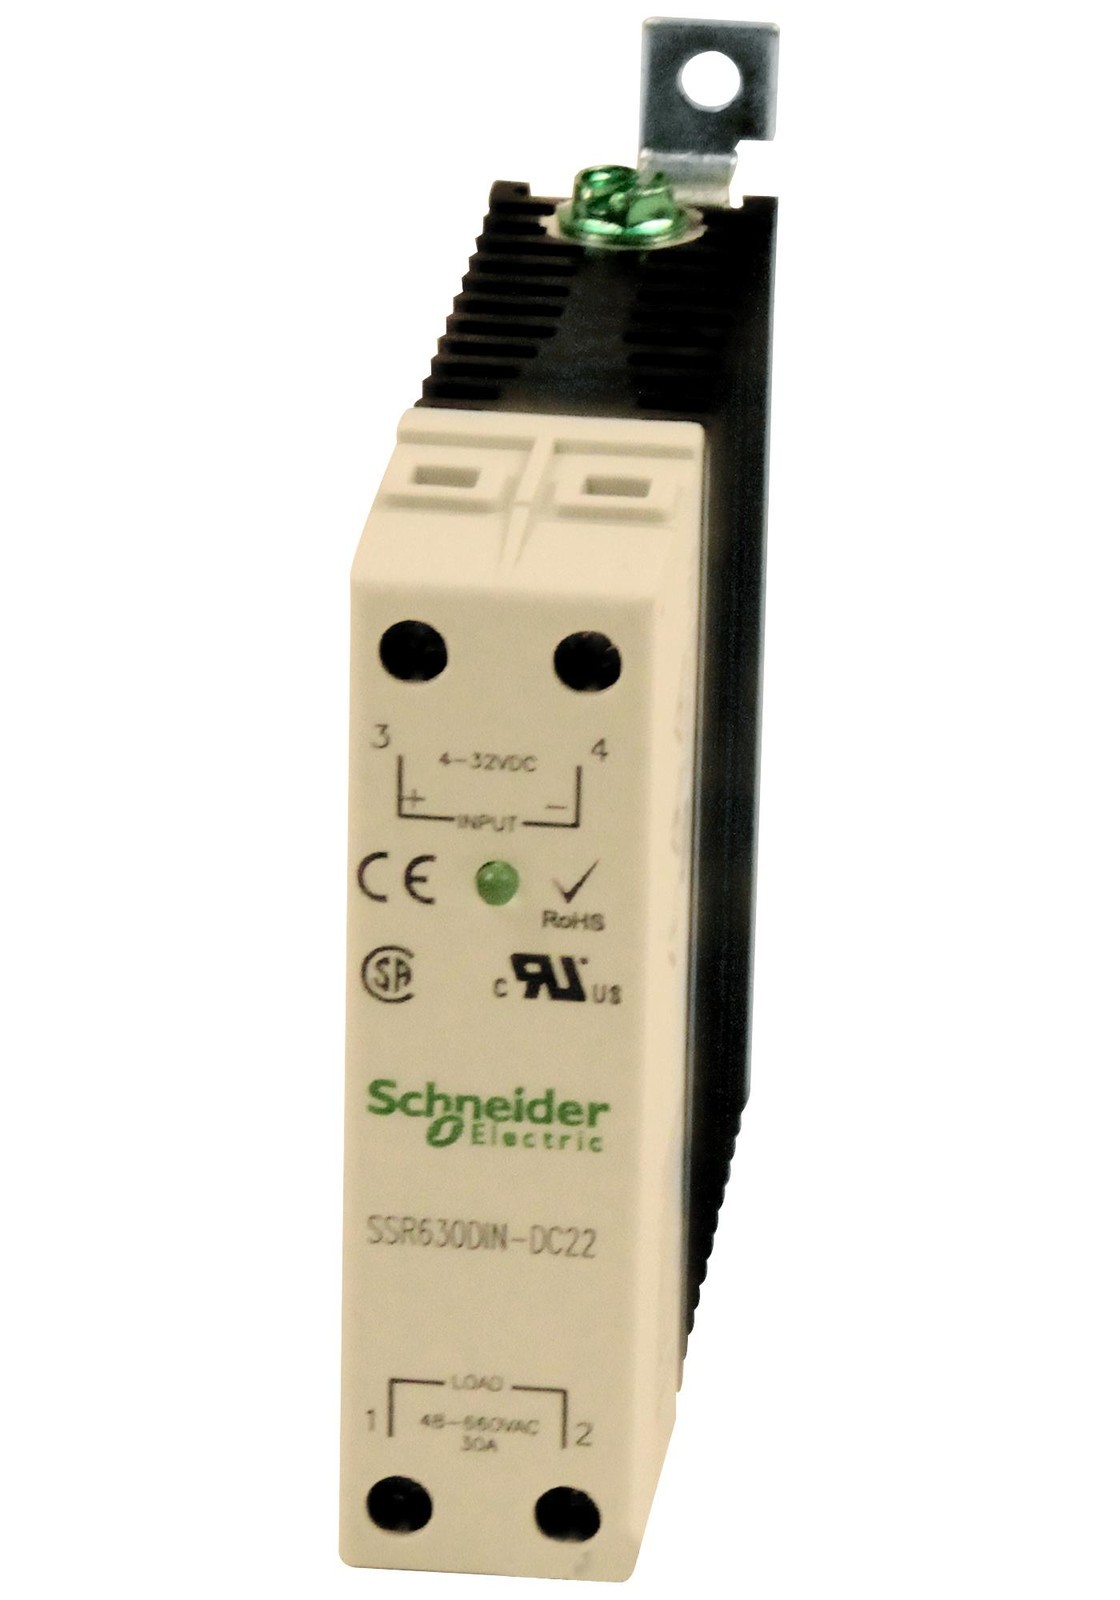 Schneider Electric/legacy Relay Ssr630Din-Dc22 Ssr, Din Rail Mount, 600Vac, 32Vdc, 30A